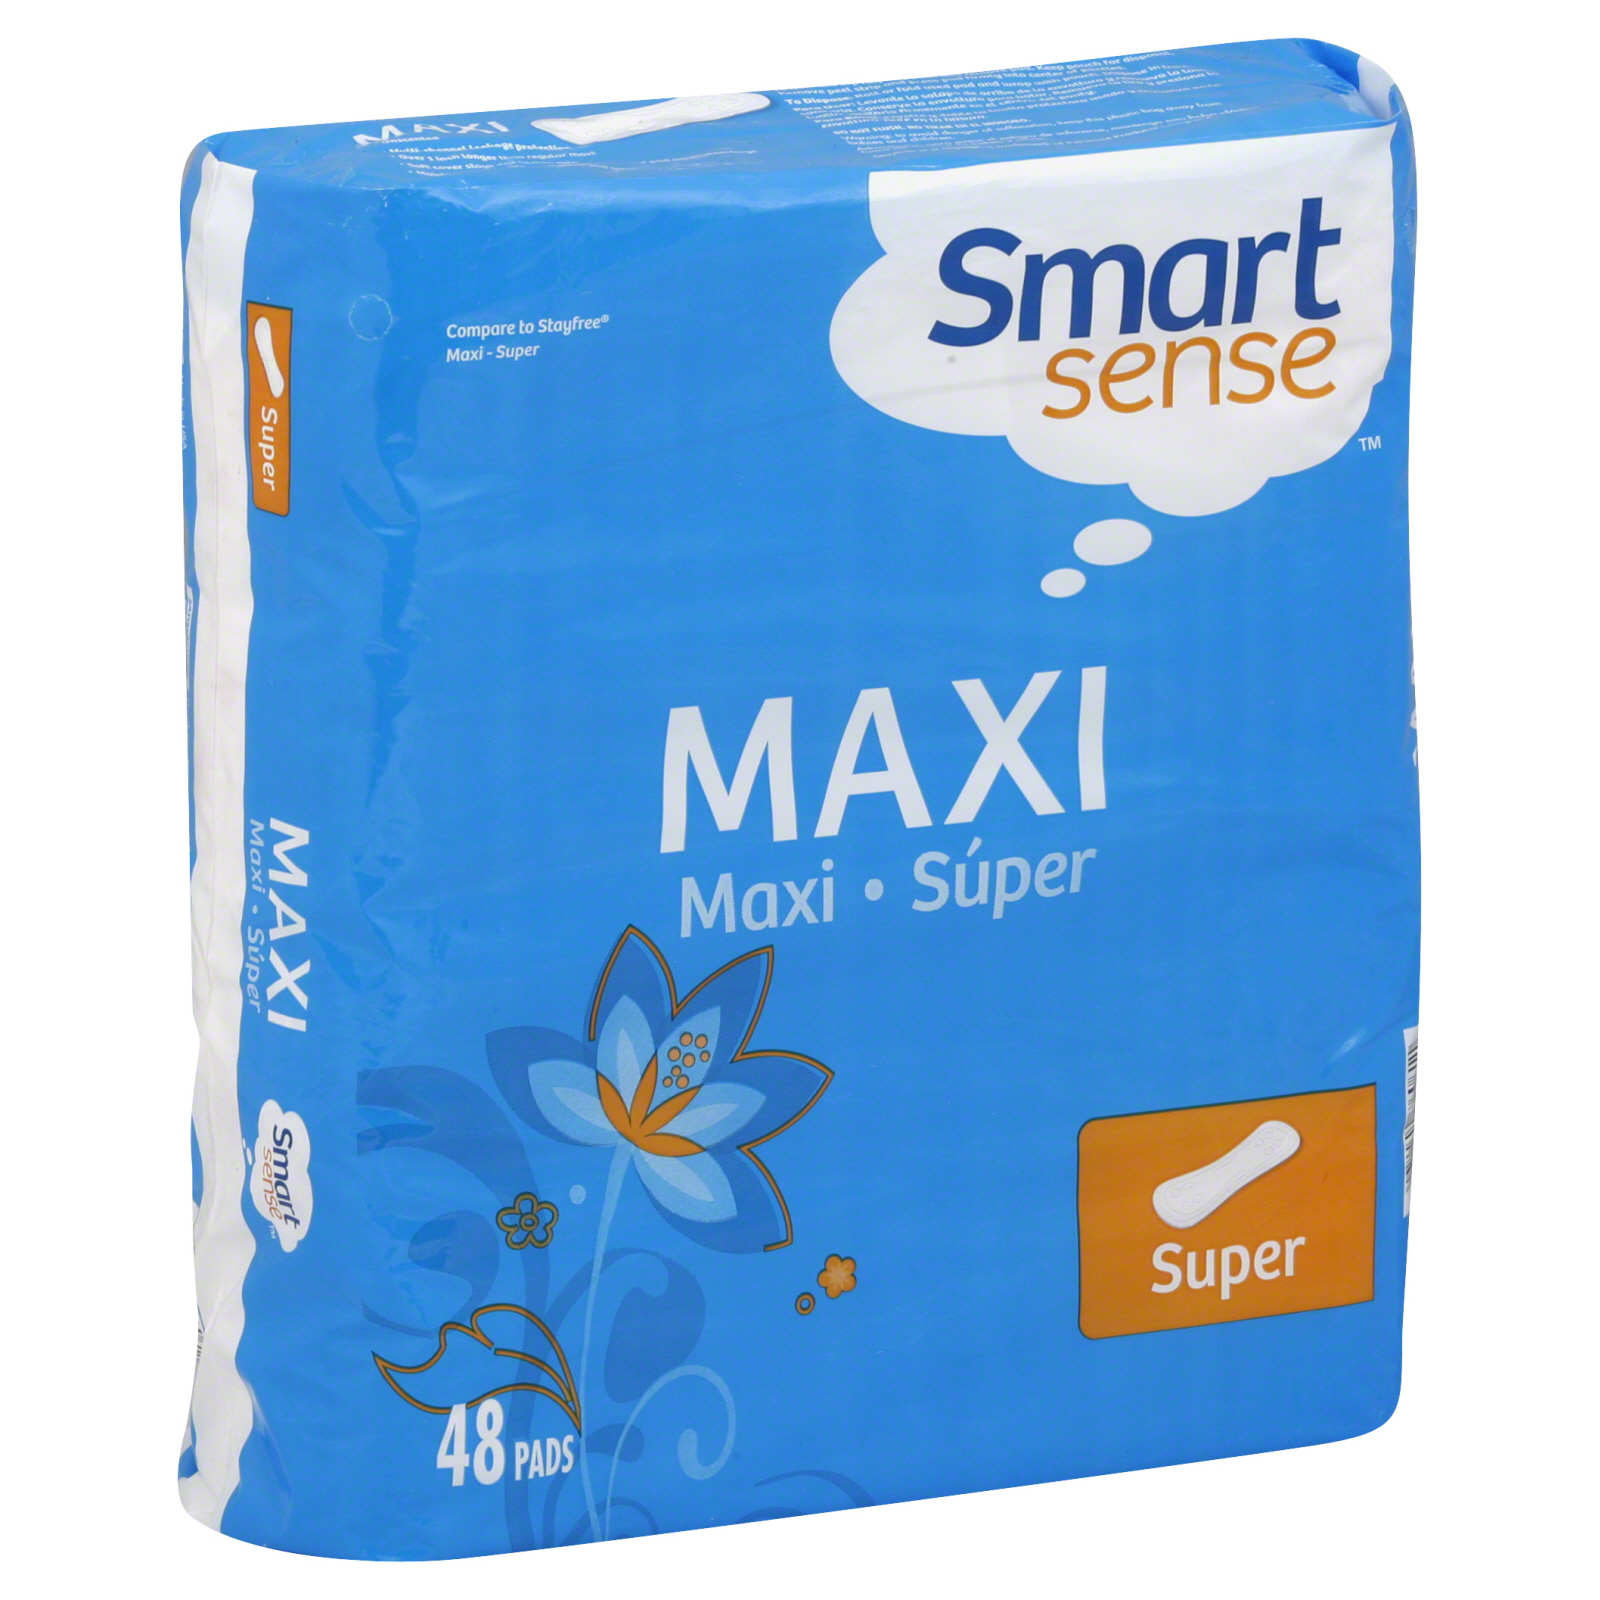 Smart Sense Maxi Pads, Super, Unscented, 48 pads